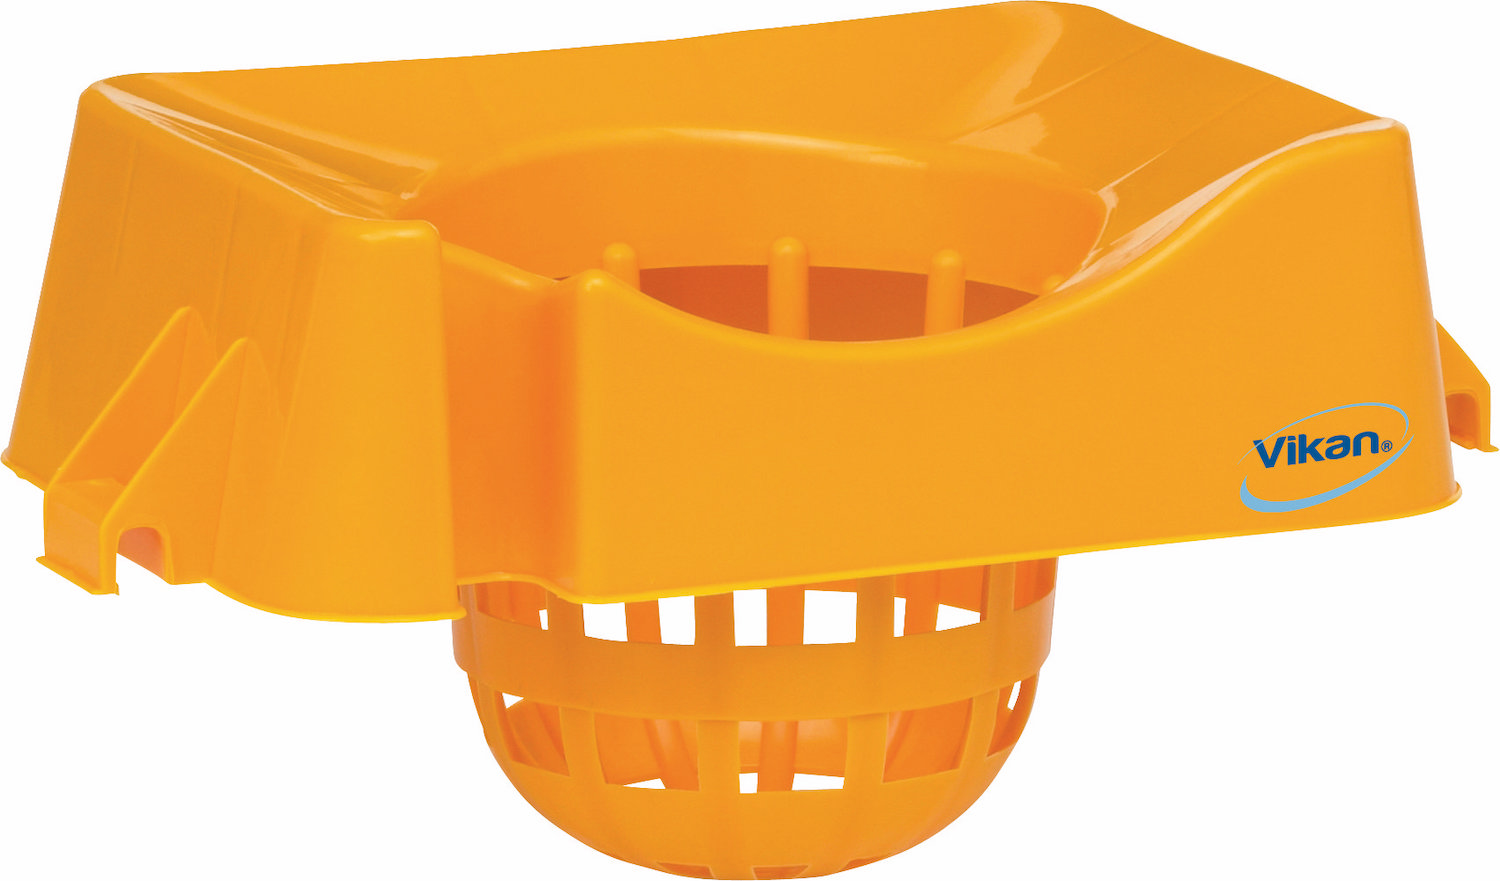 Wringer f/Mop Bucket, 375018, Yellow